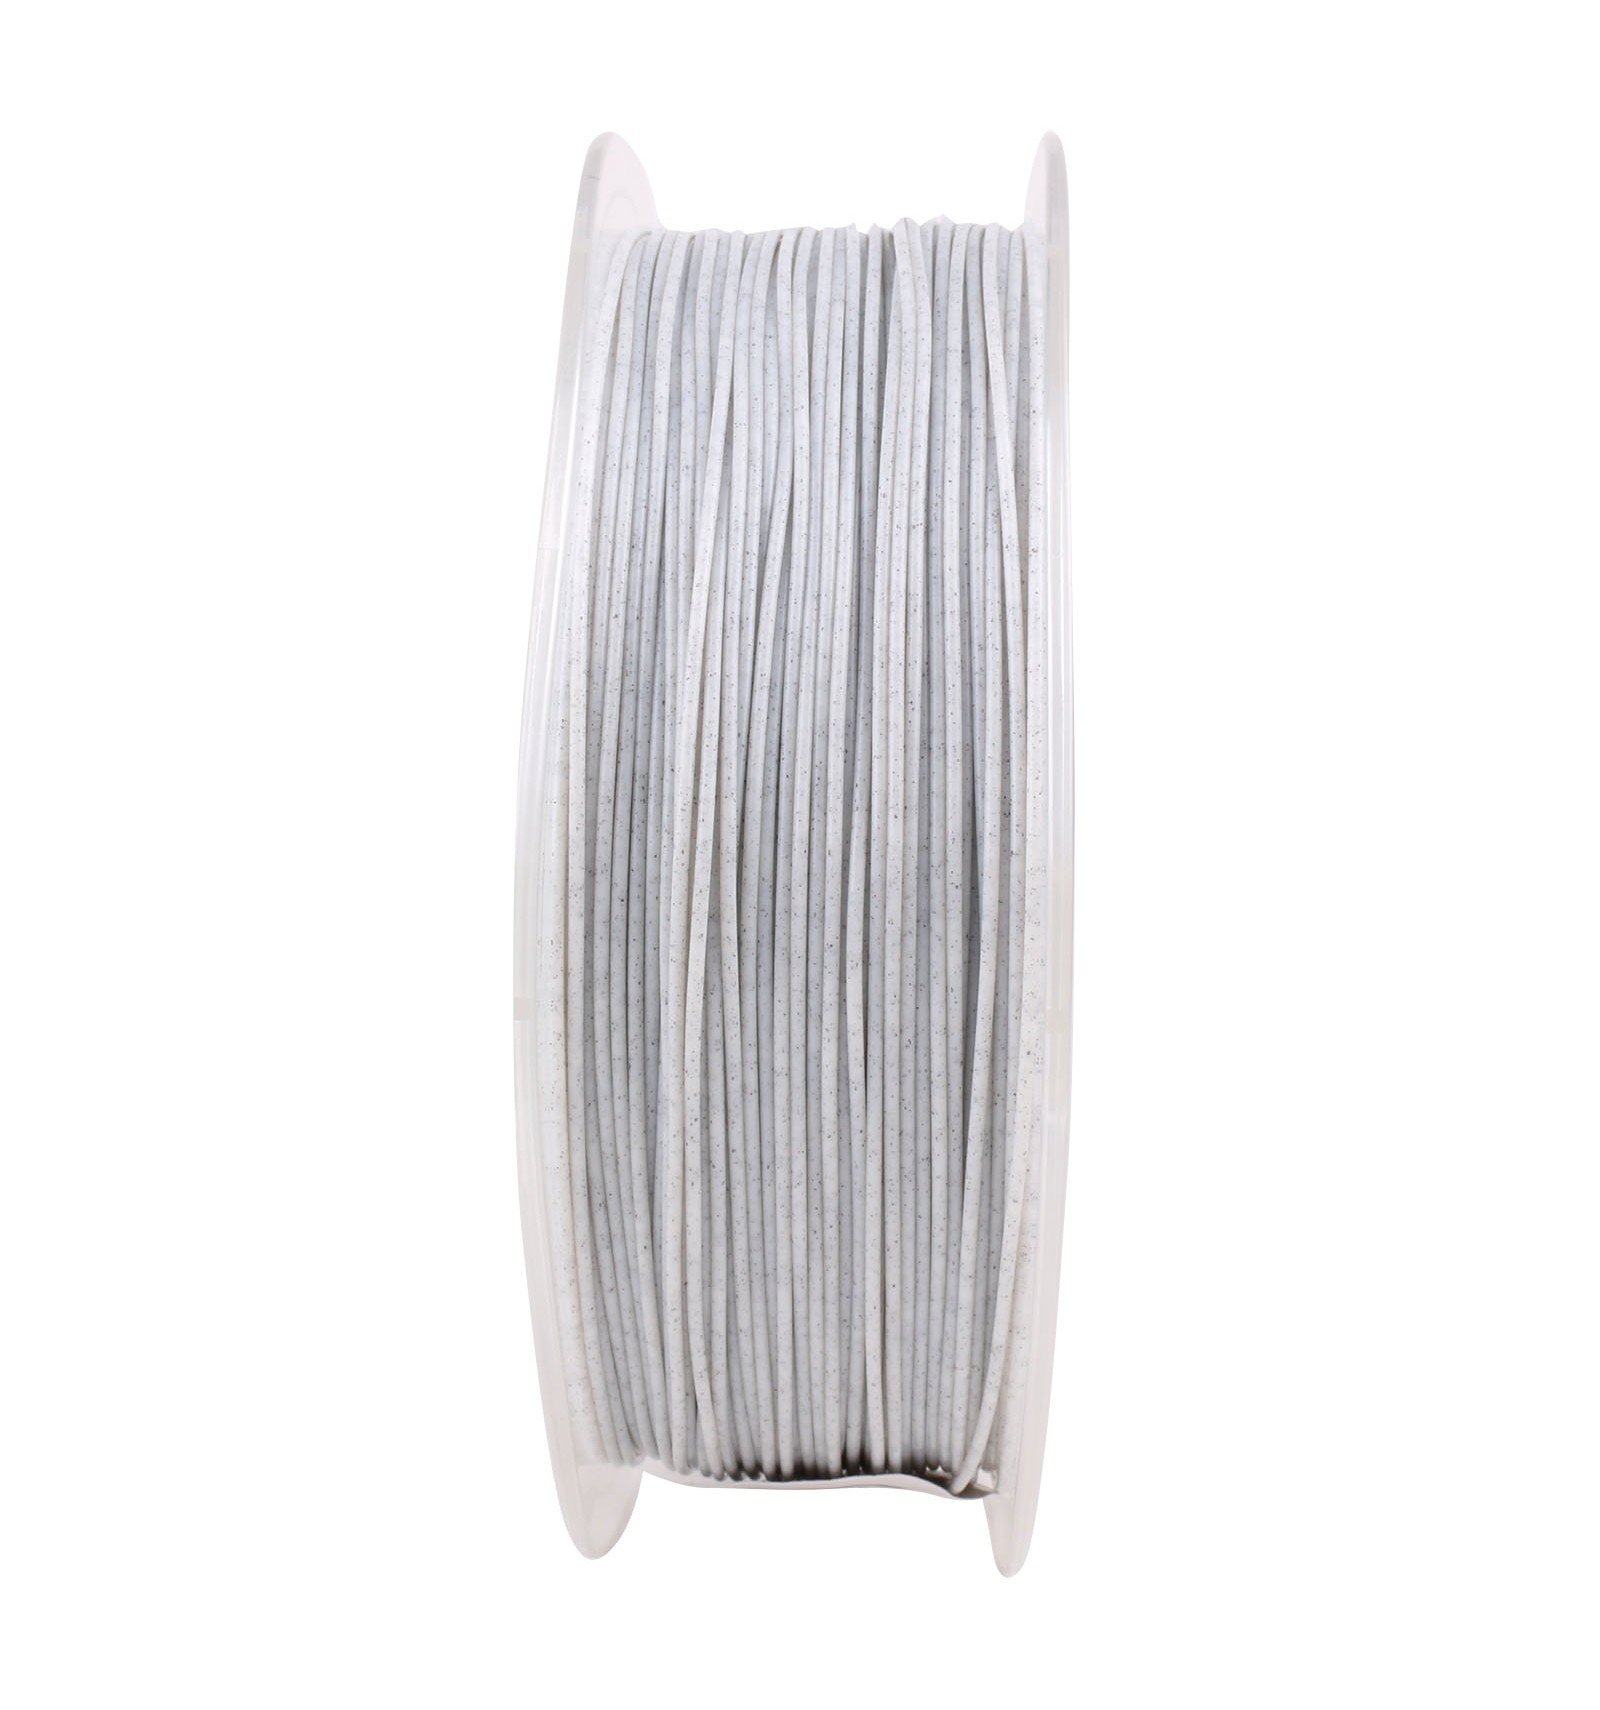 SunLu Marble PLA Filament | 1.75mm, White with Black Specks